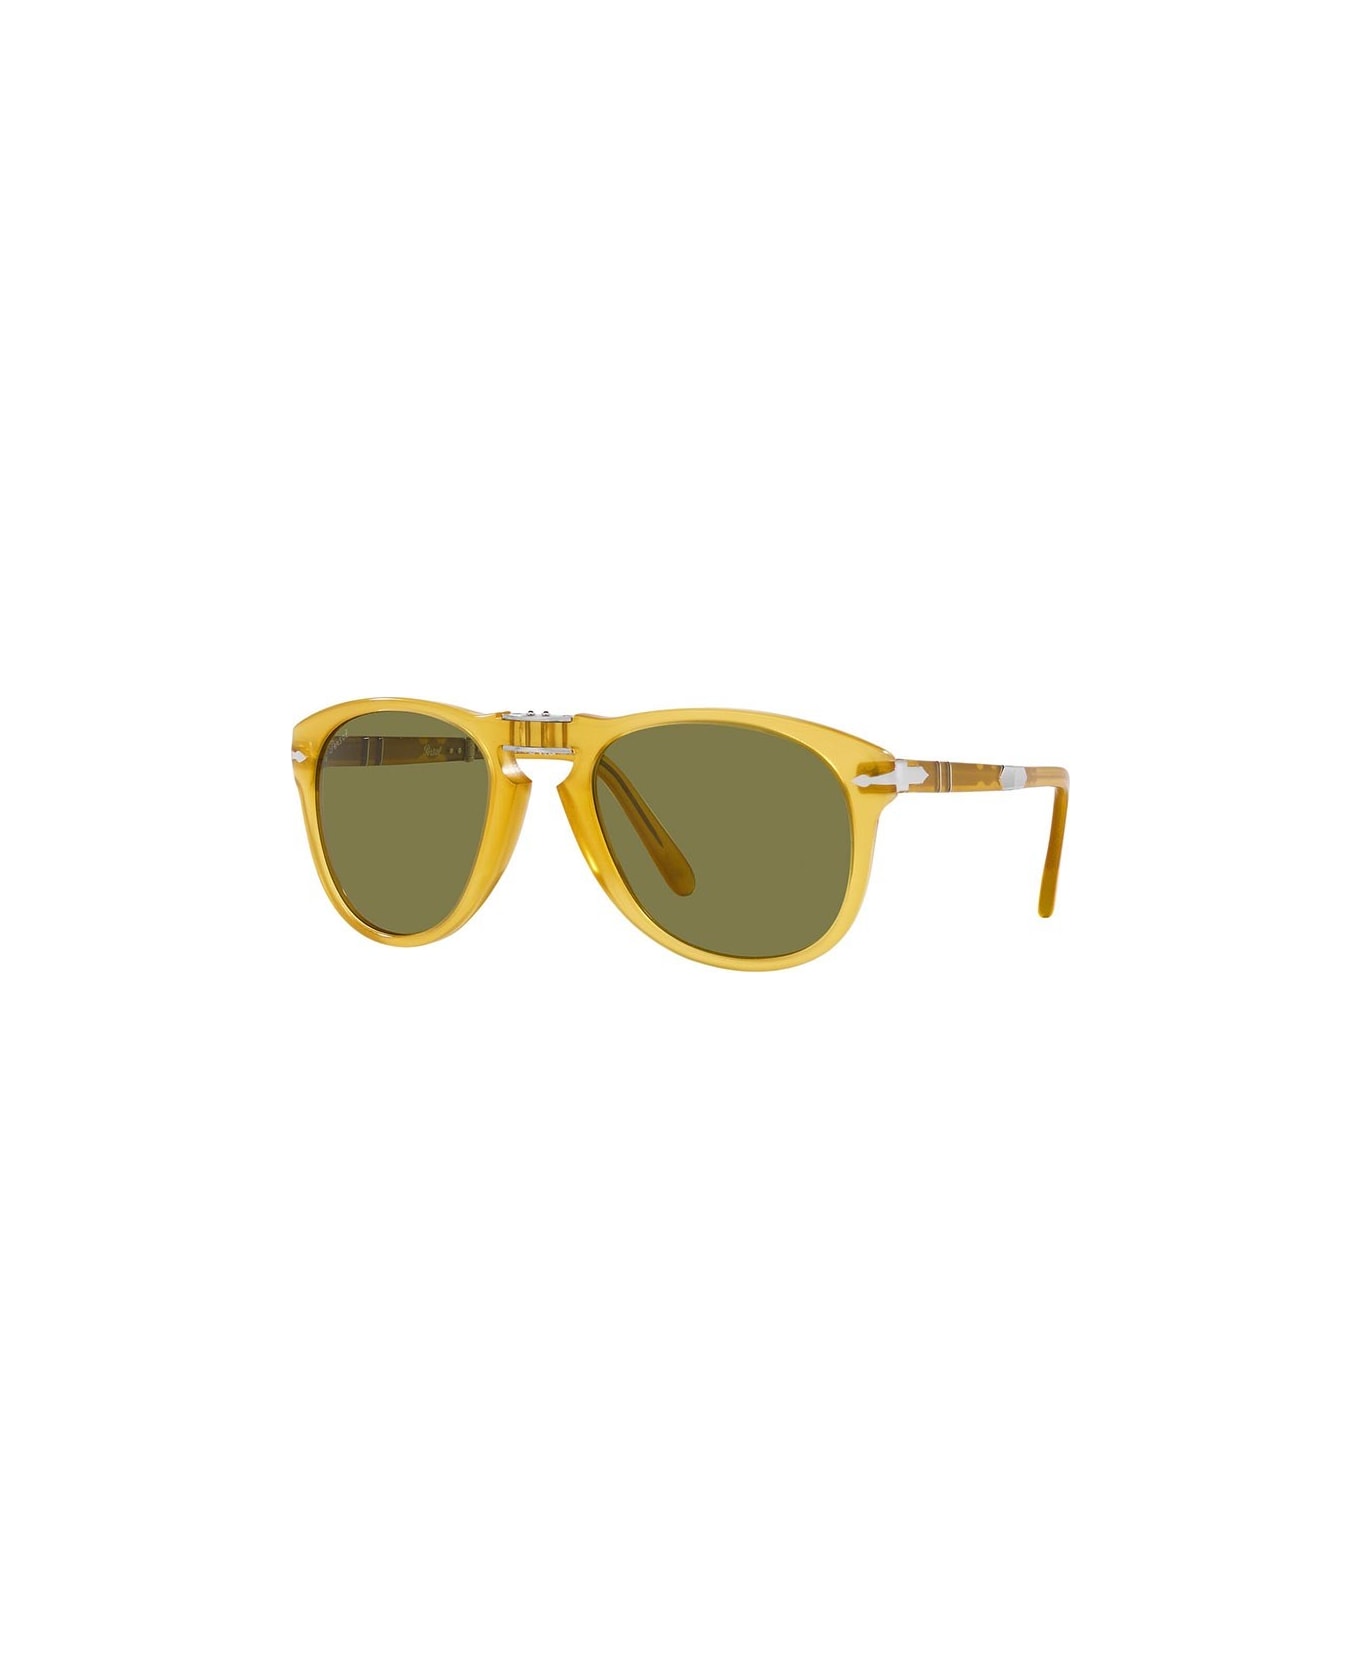 Persol Sunglasses - Giallo/Verde サングラス